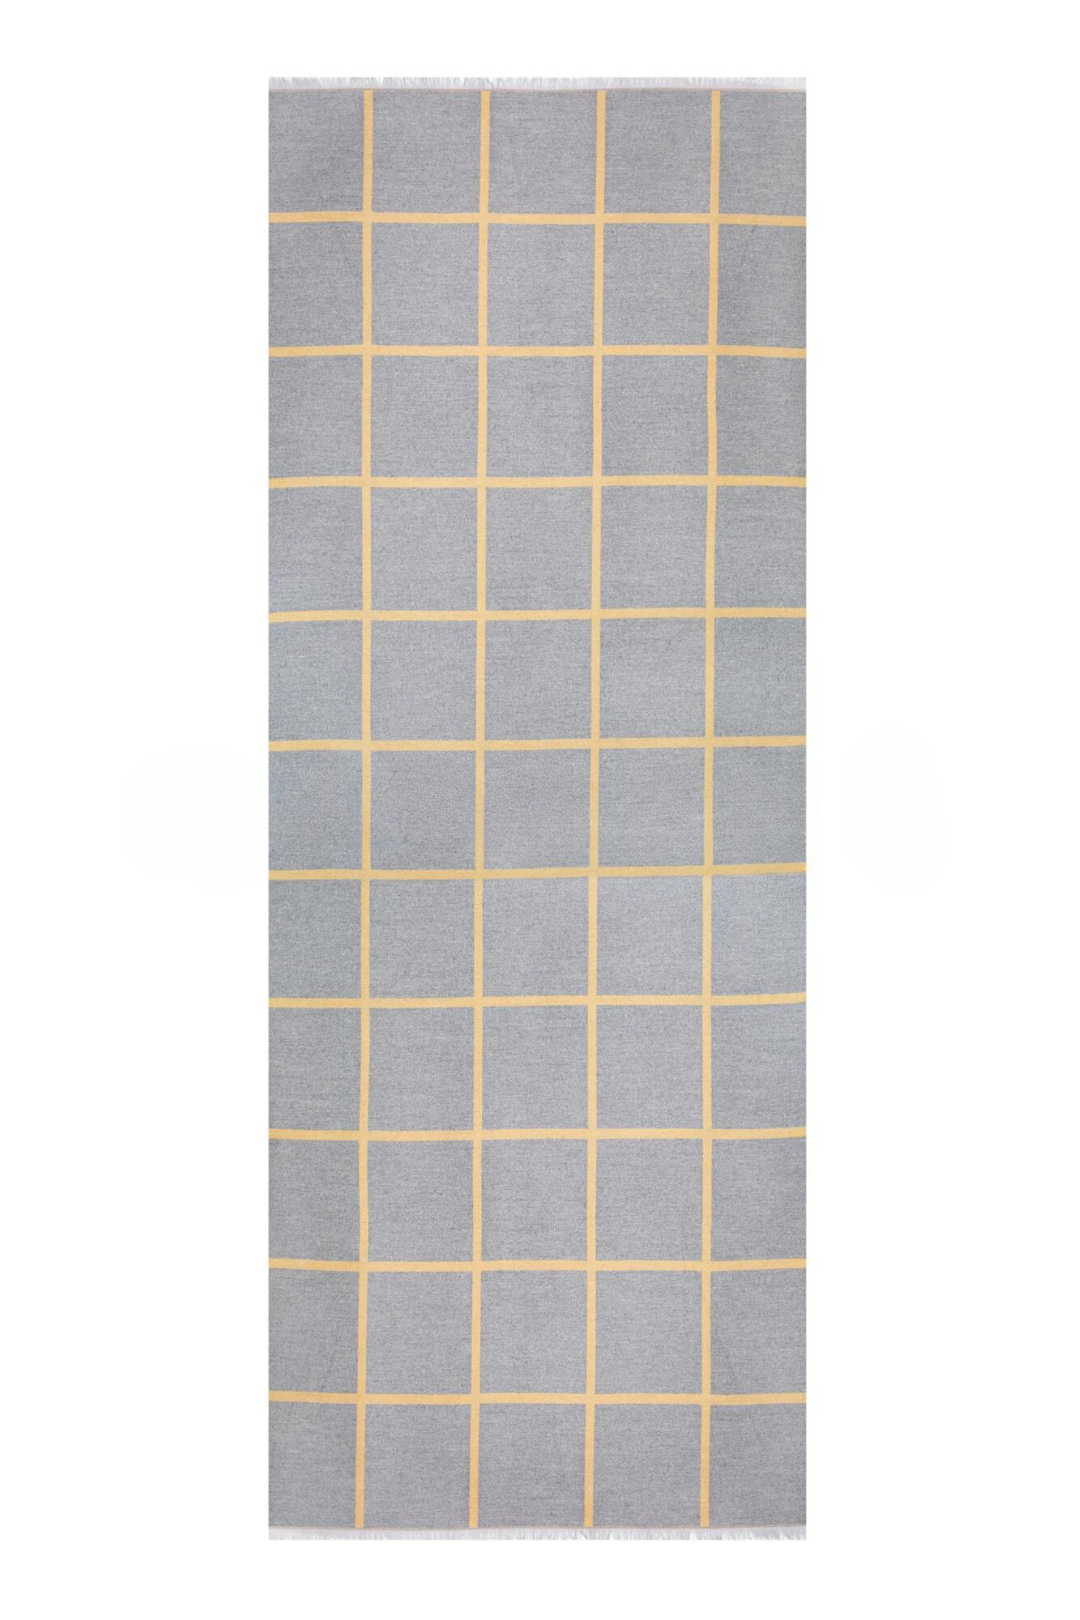 Reversible Mo-shmere Modal Cashmere Checkers Shawl - Mustard Gray